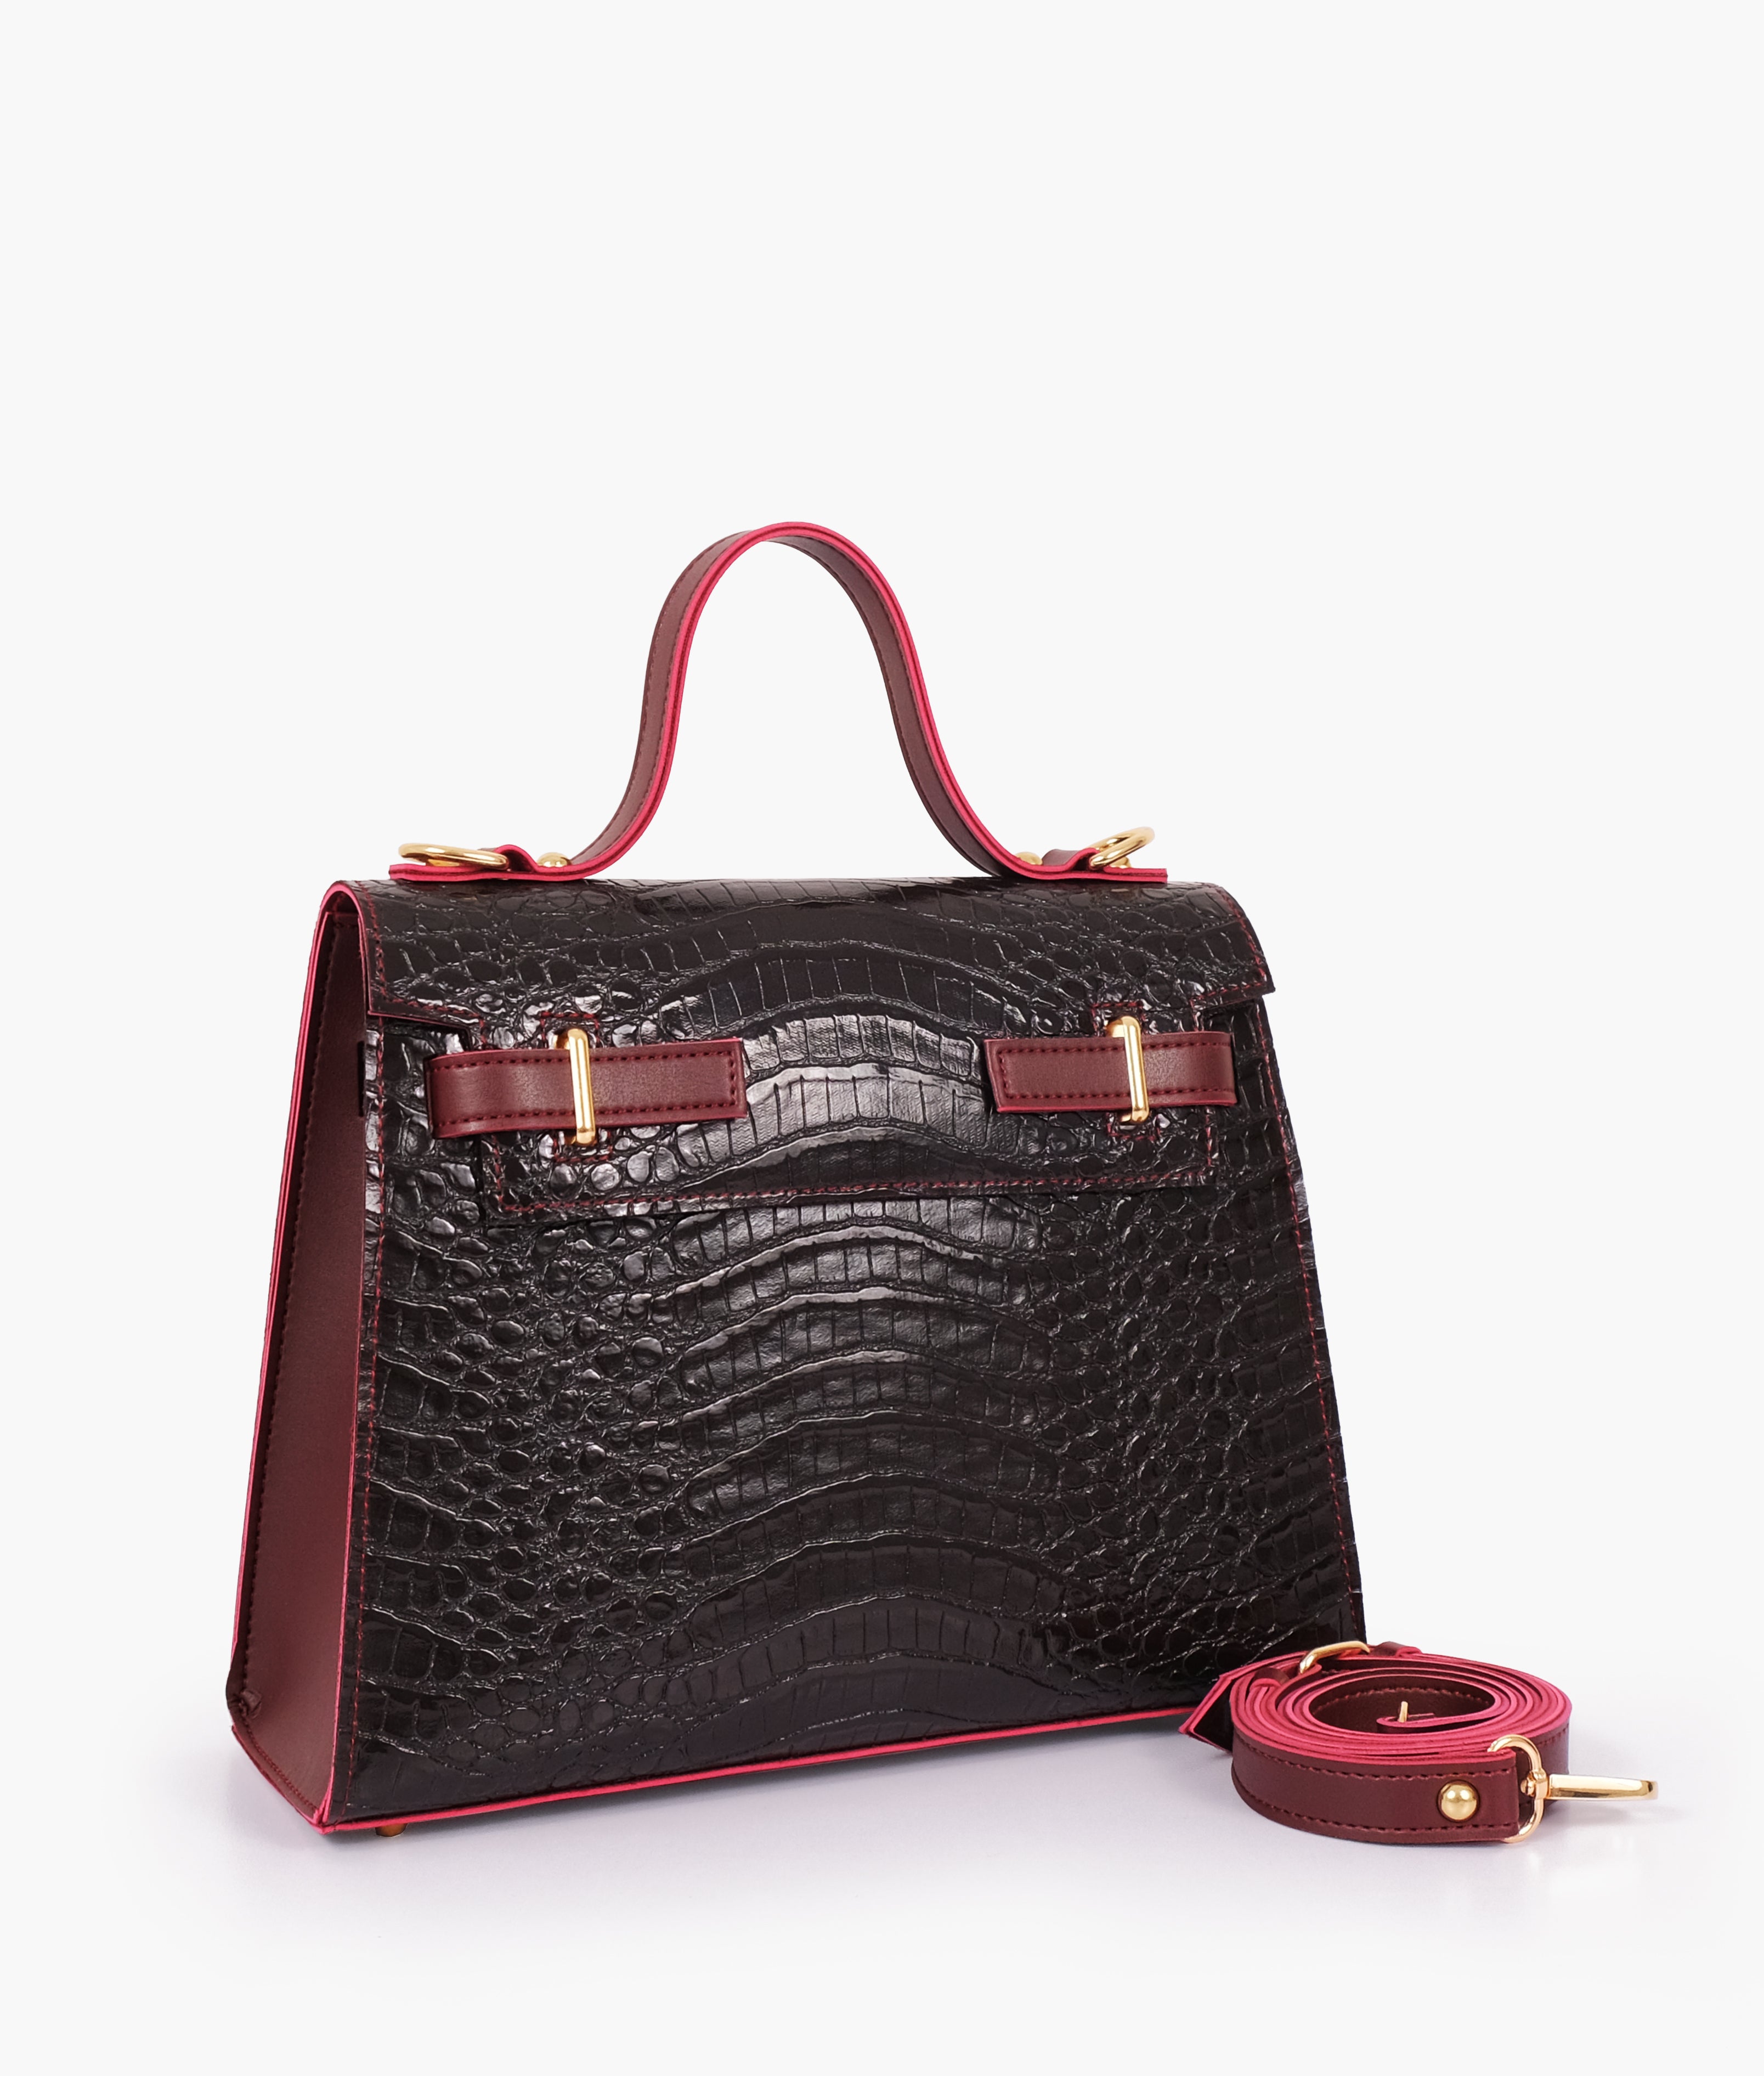 Burgundy and black crocodile cross-body bag with top-handle